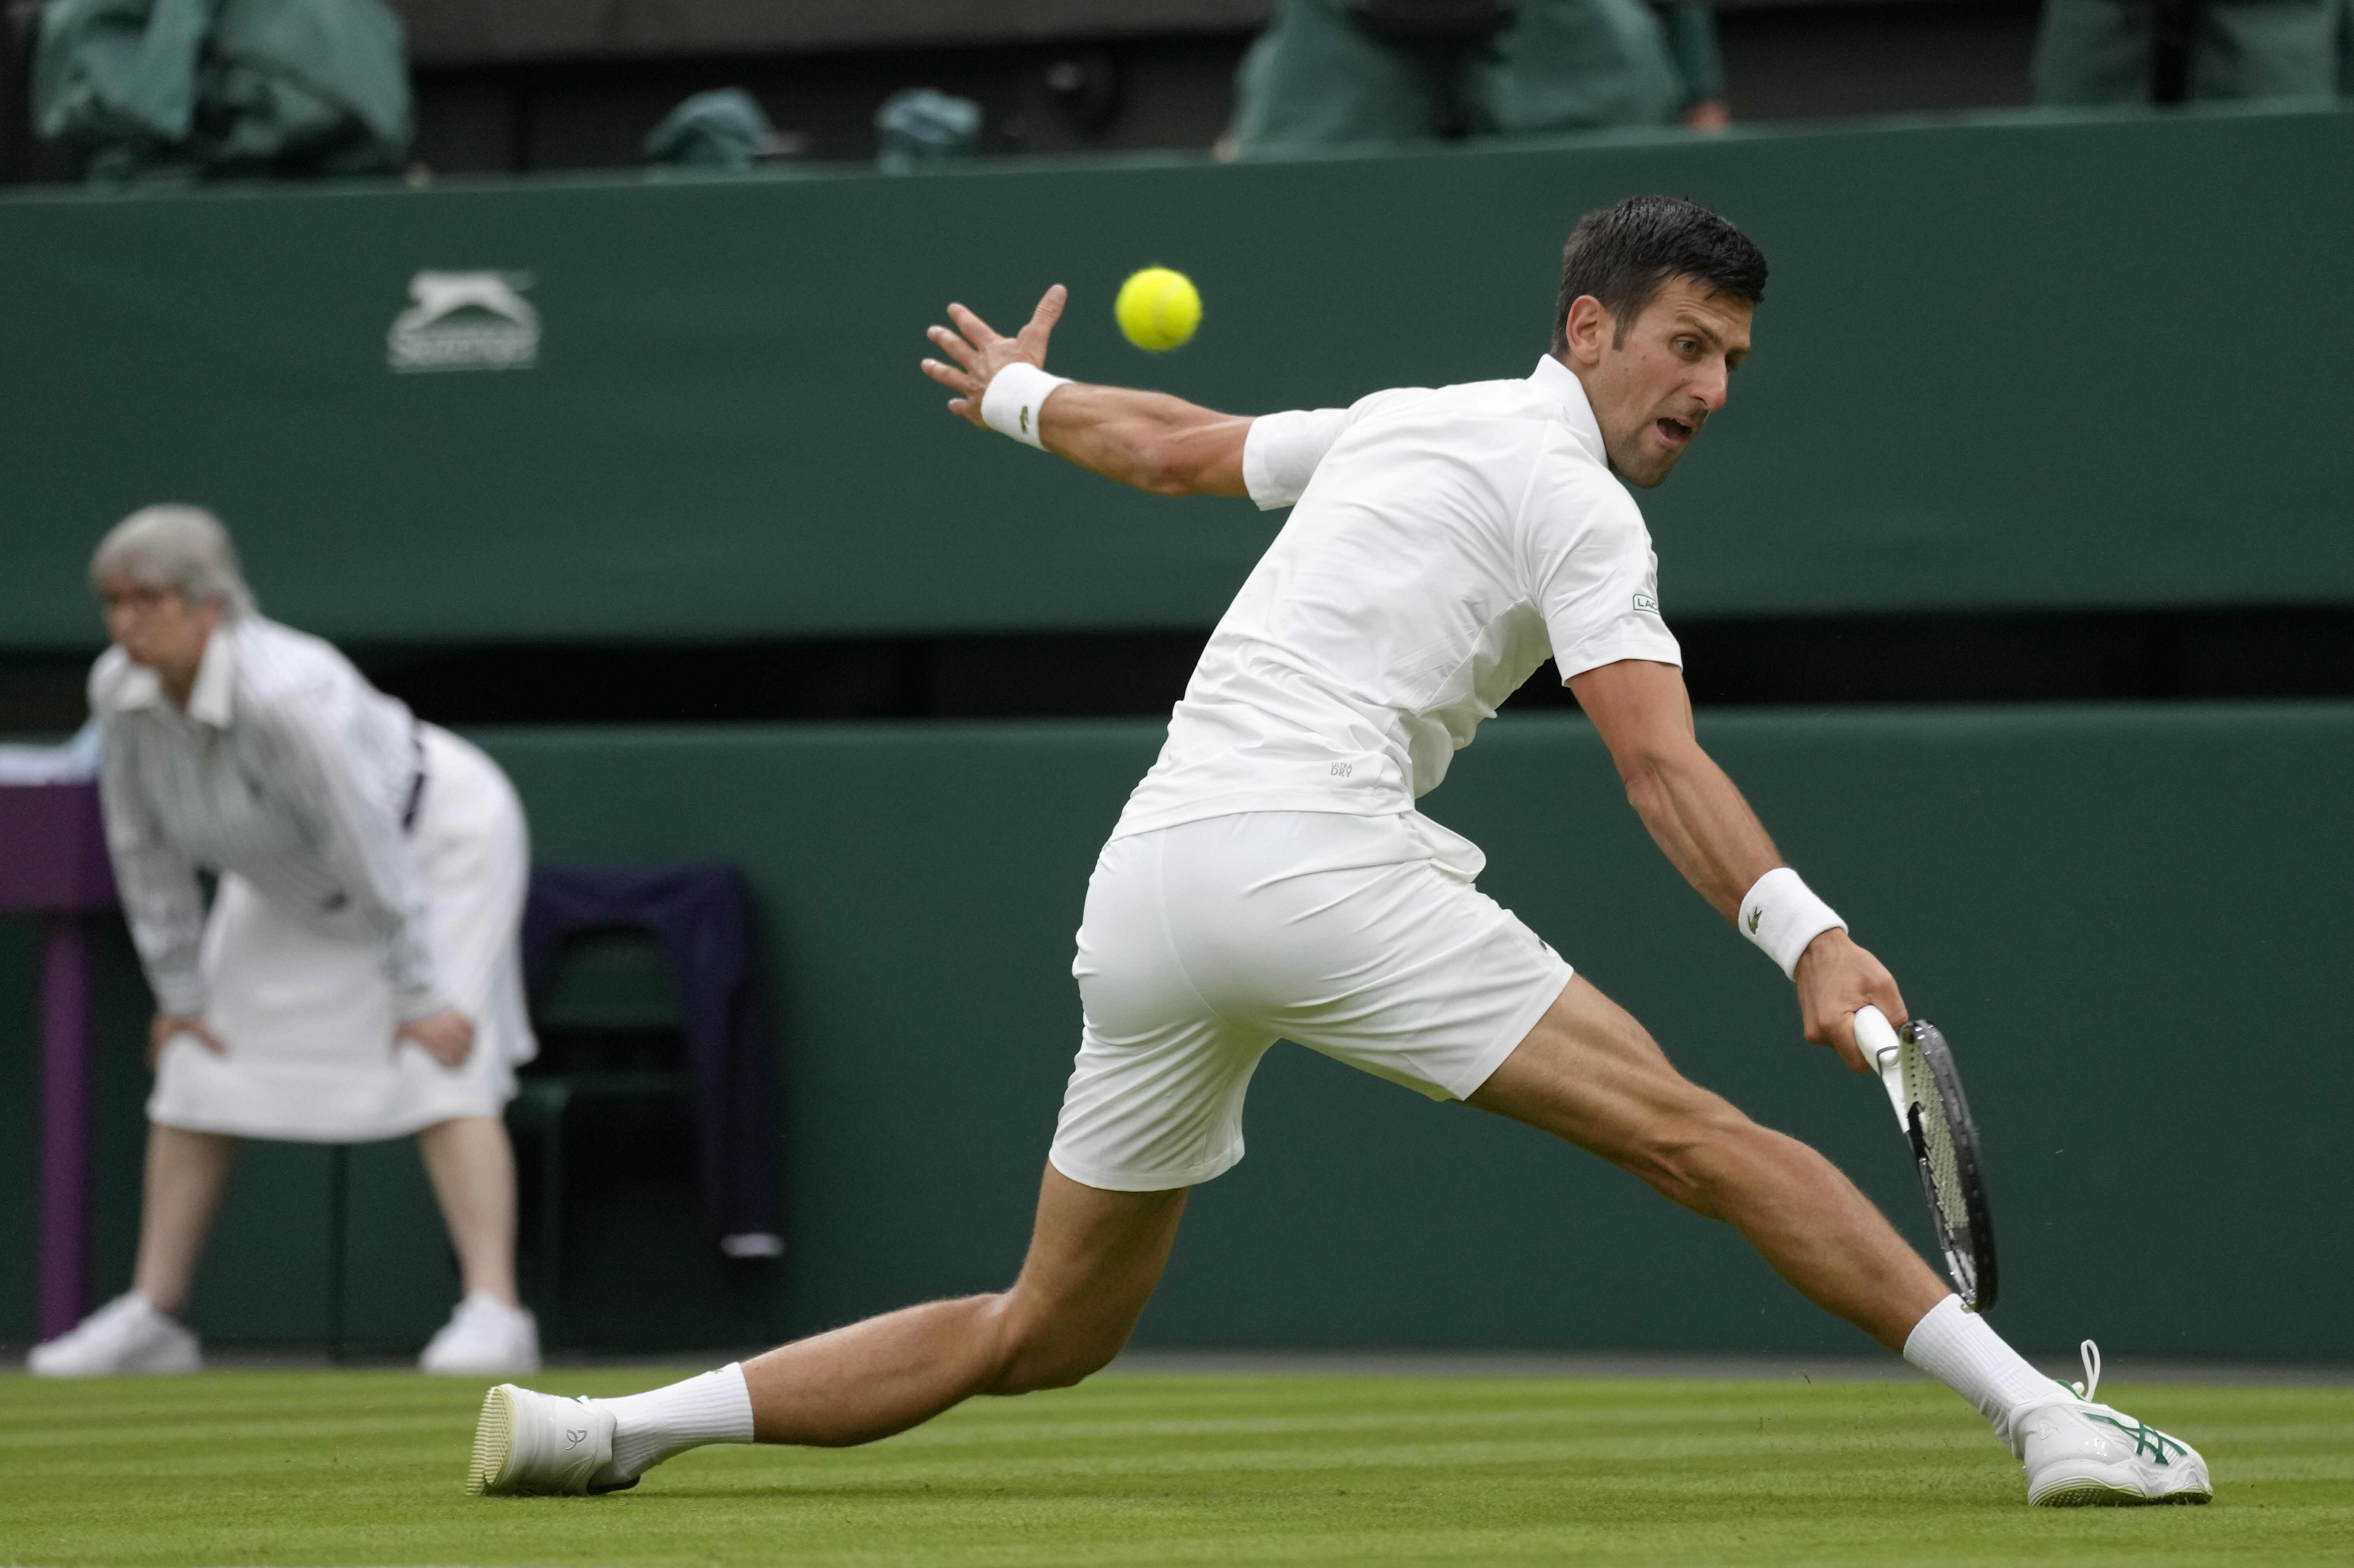 Wimbledons second round live stream (6/29) How to watch Novak Djokovic, Andy Murray online, TV, times